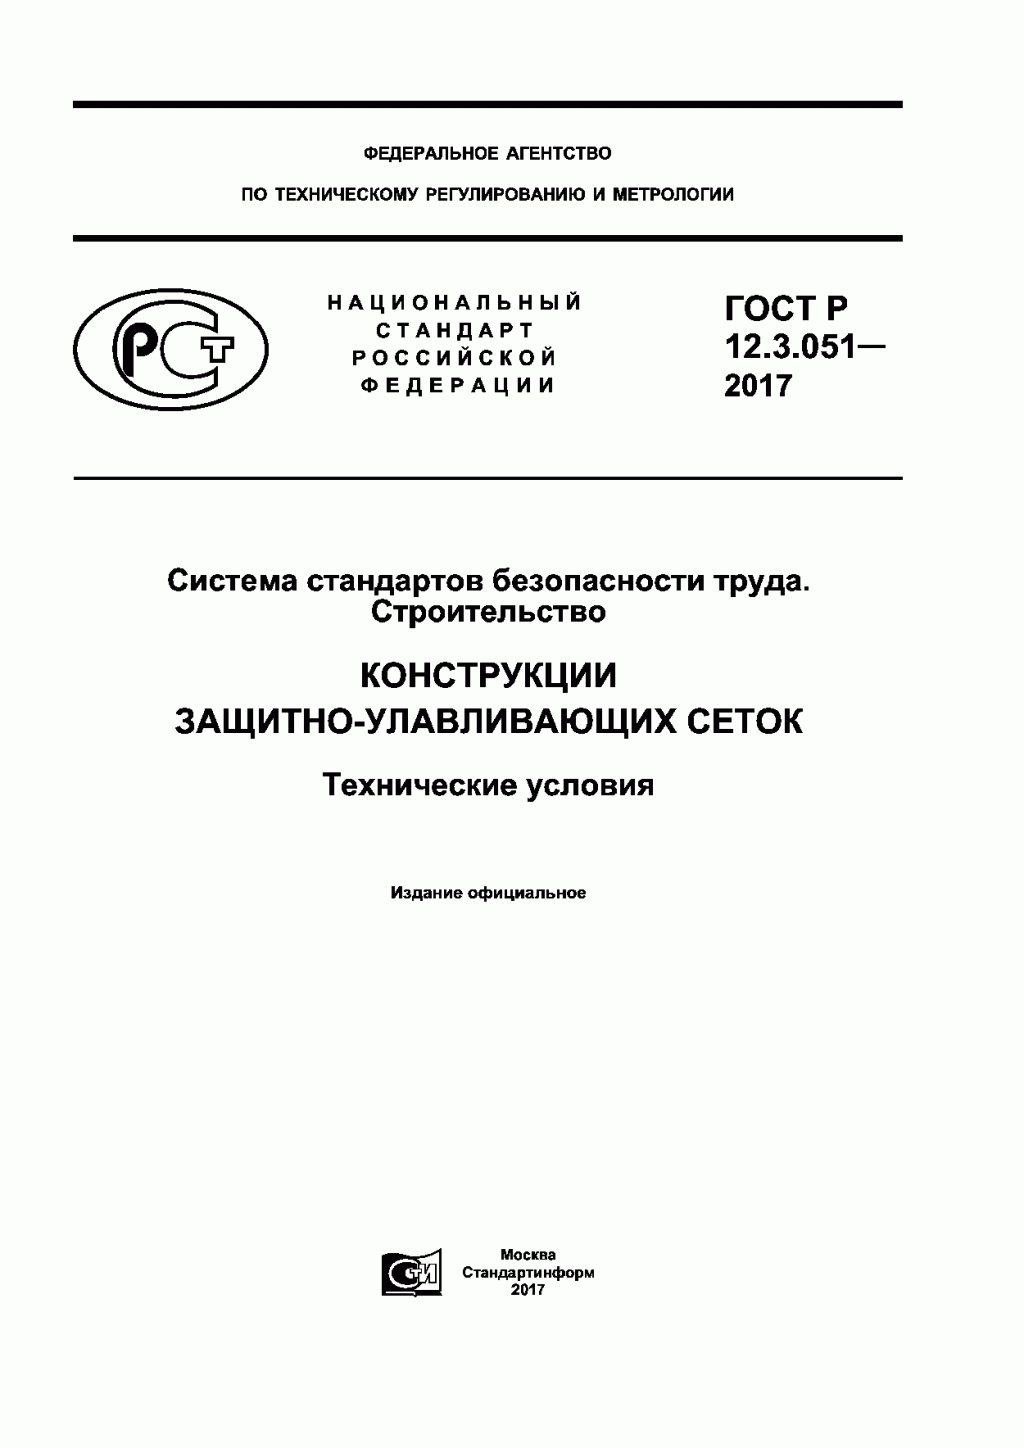 ГОСТ Р 12.3.051-2017